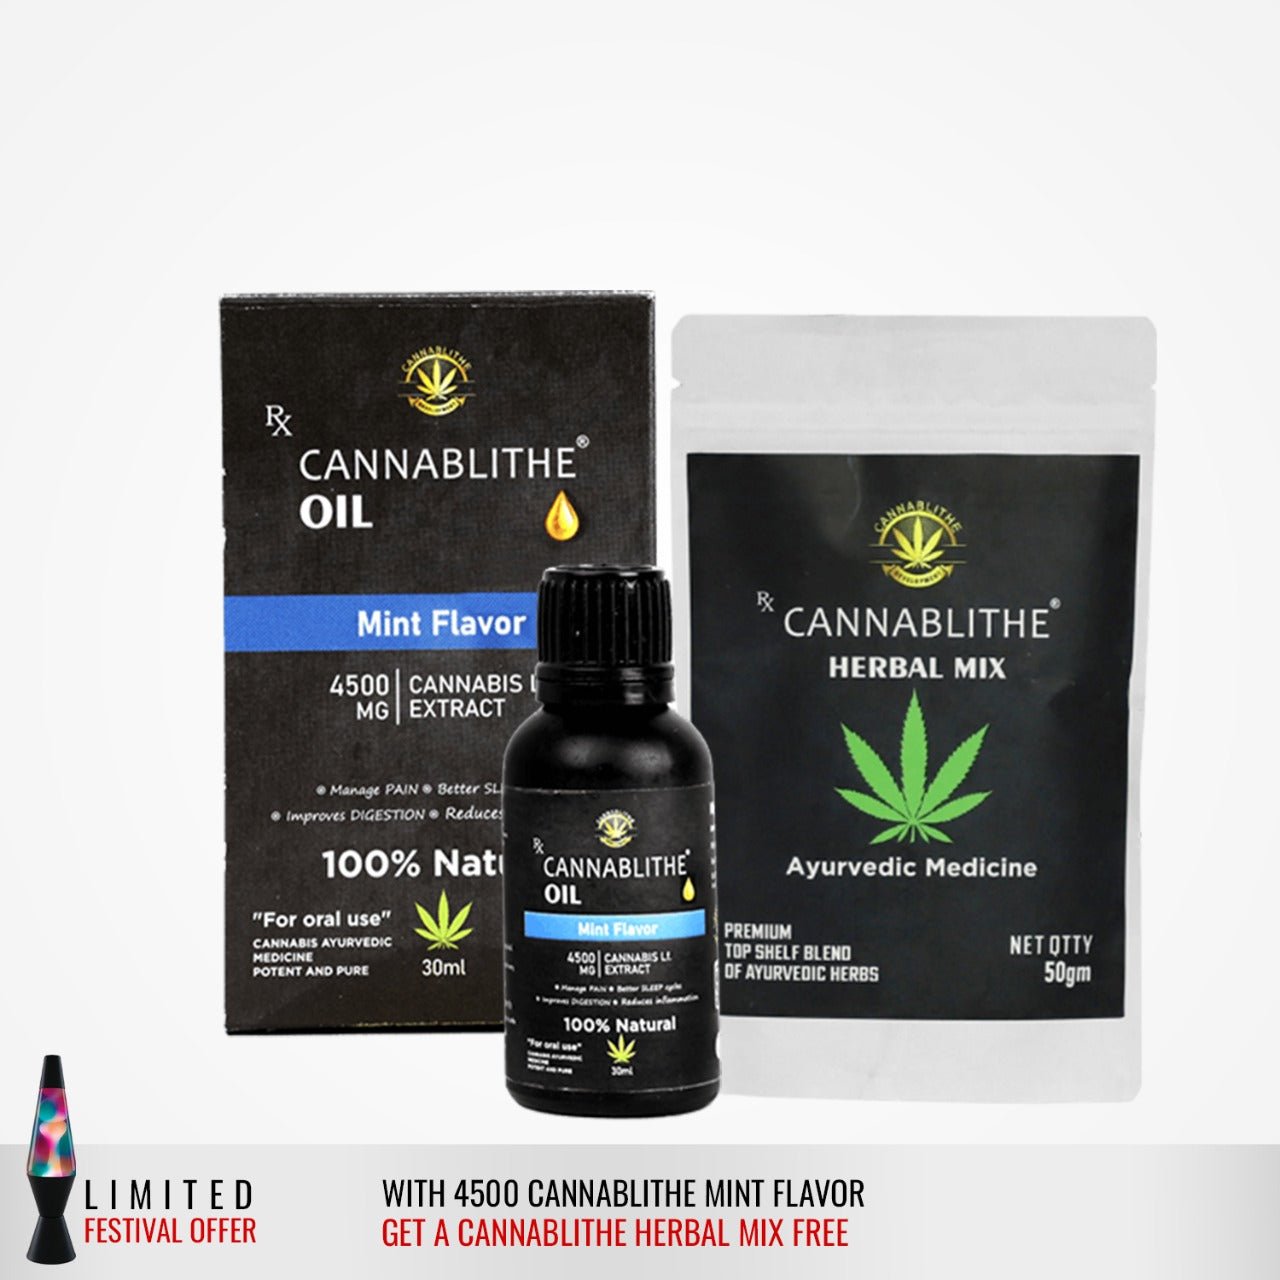 Free Cannablithe herbal mix (10mg) with 4500 Cannablithe mint flavor cannabis oil - CBD Store India